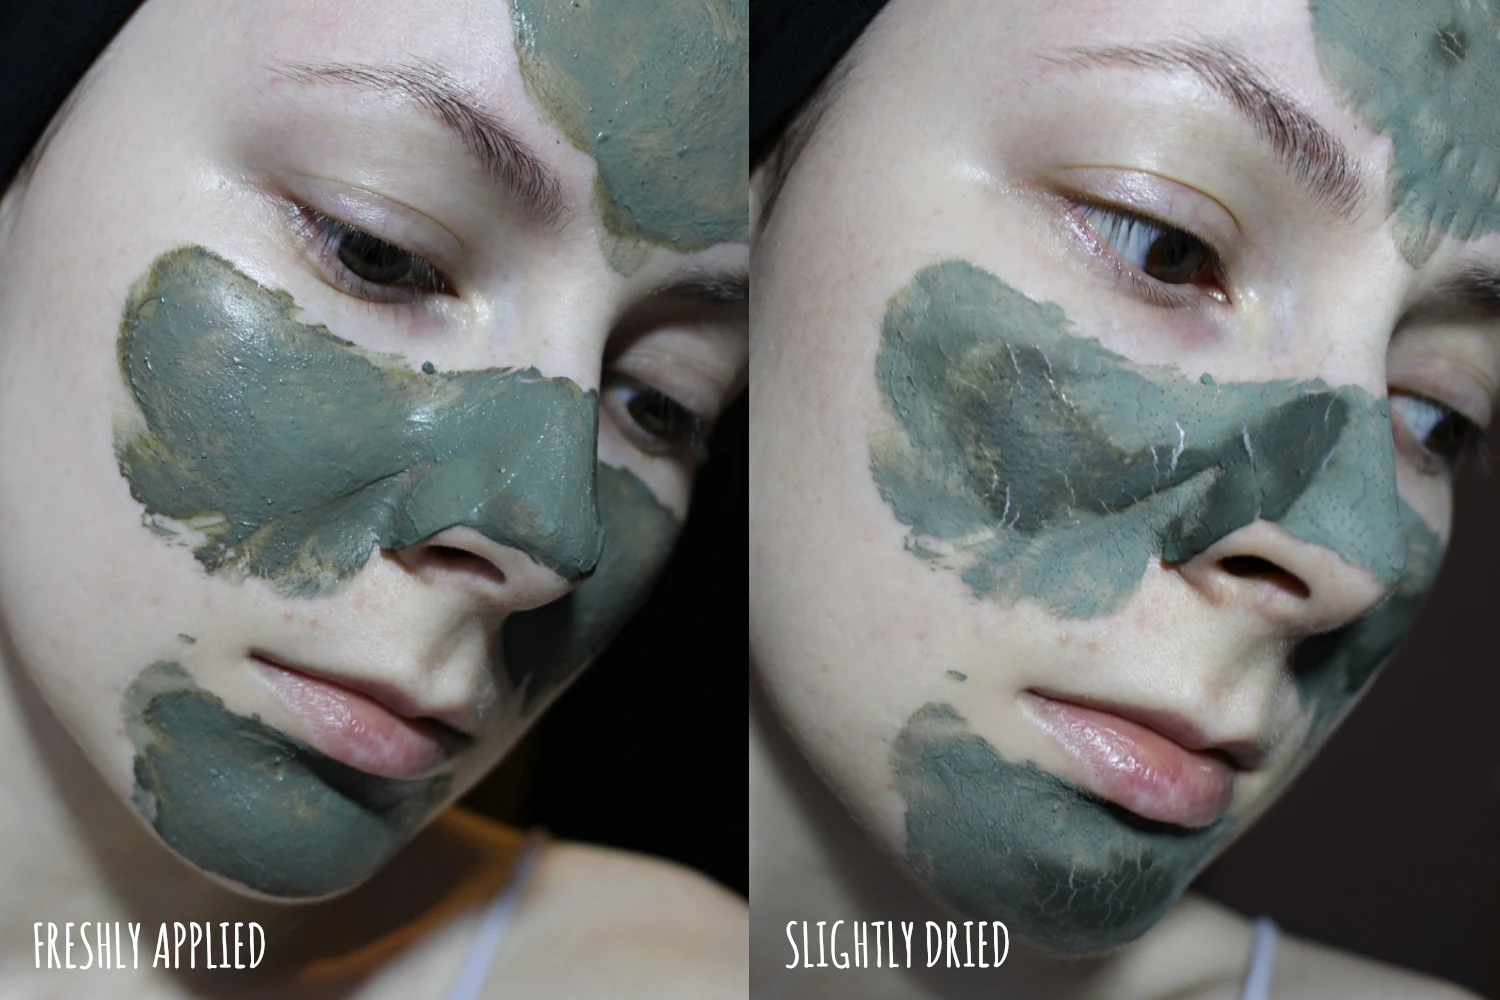 Liz Breygel demonstrates the effect of green clay mask on her skin